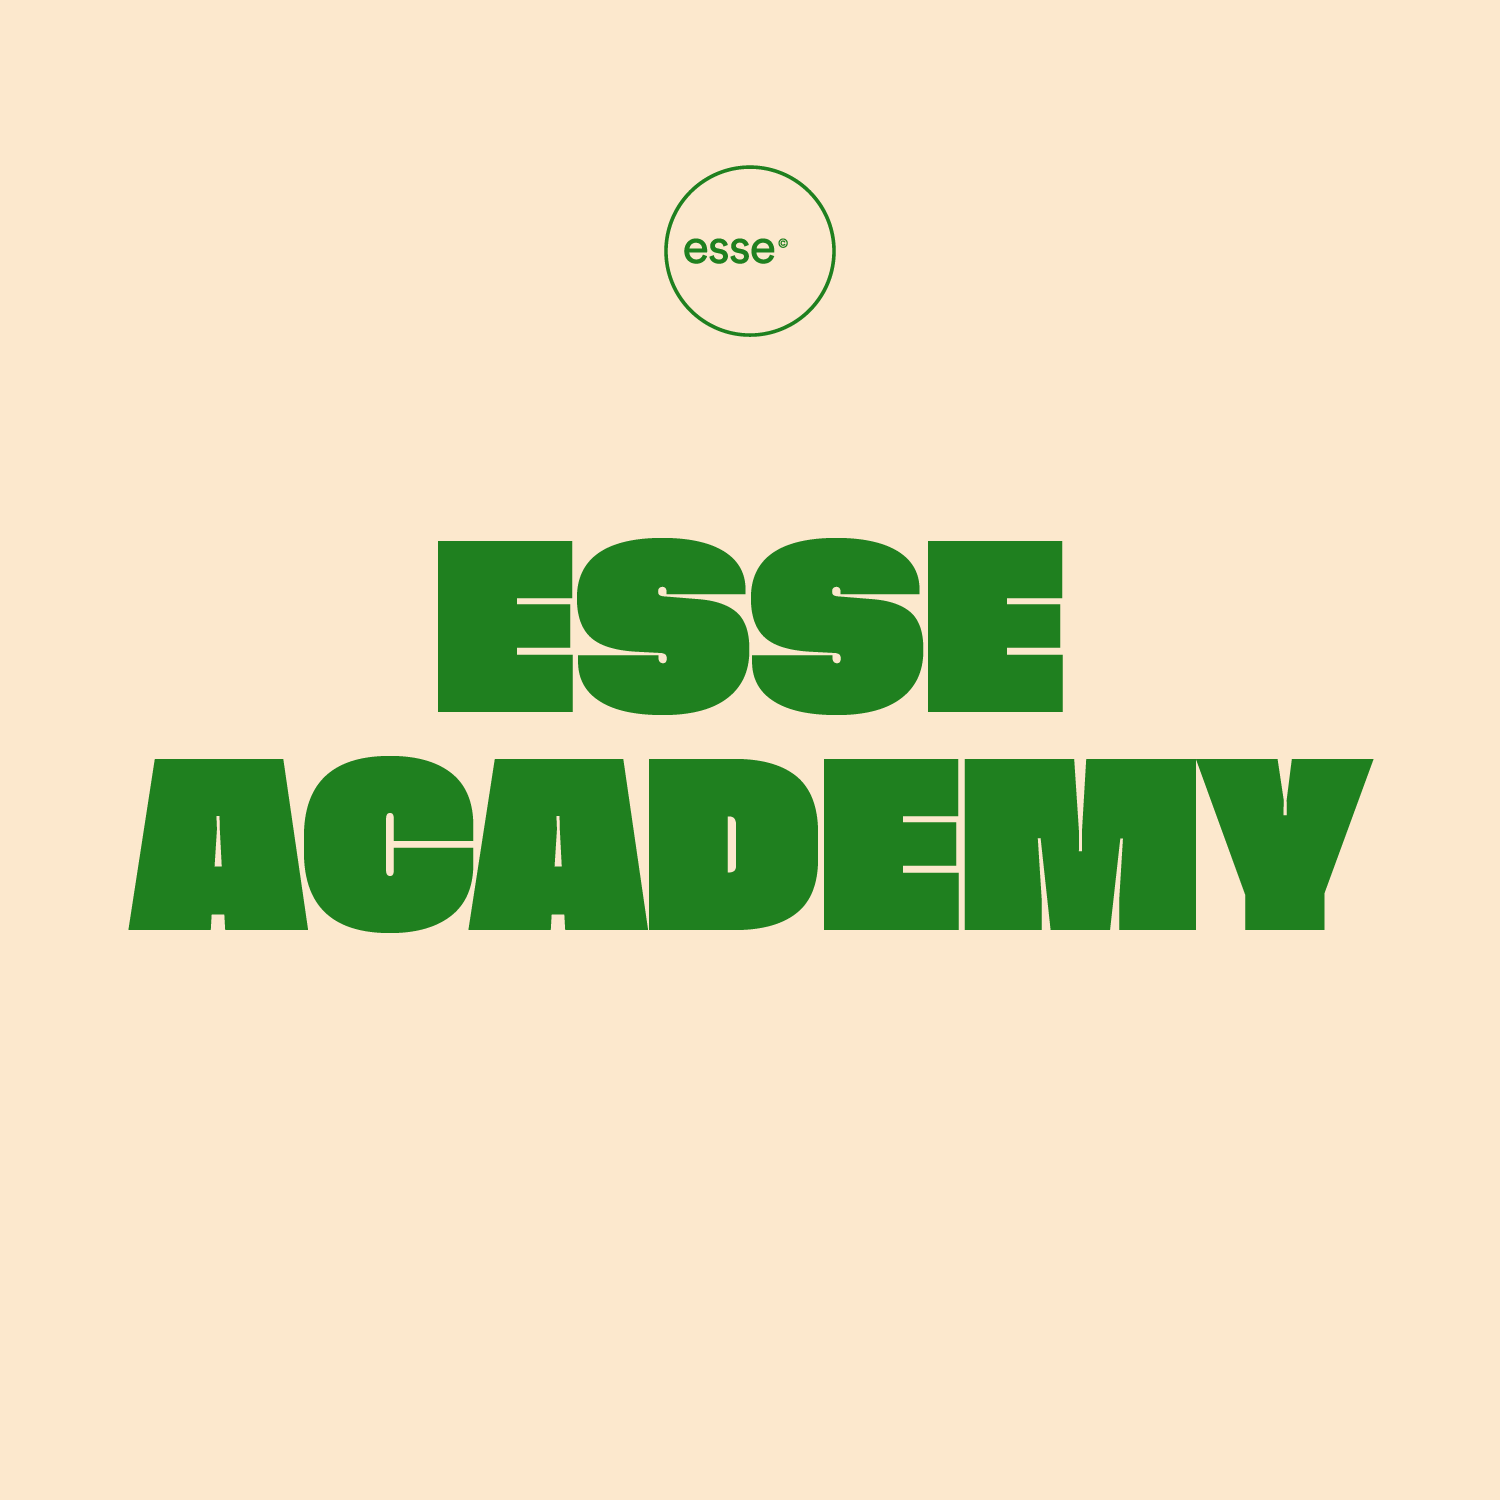 Image of esse Academy